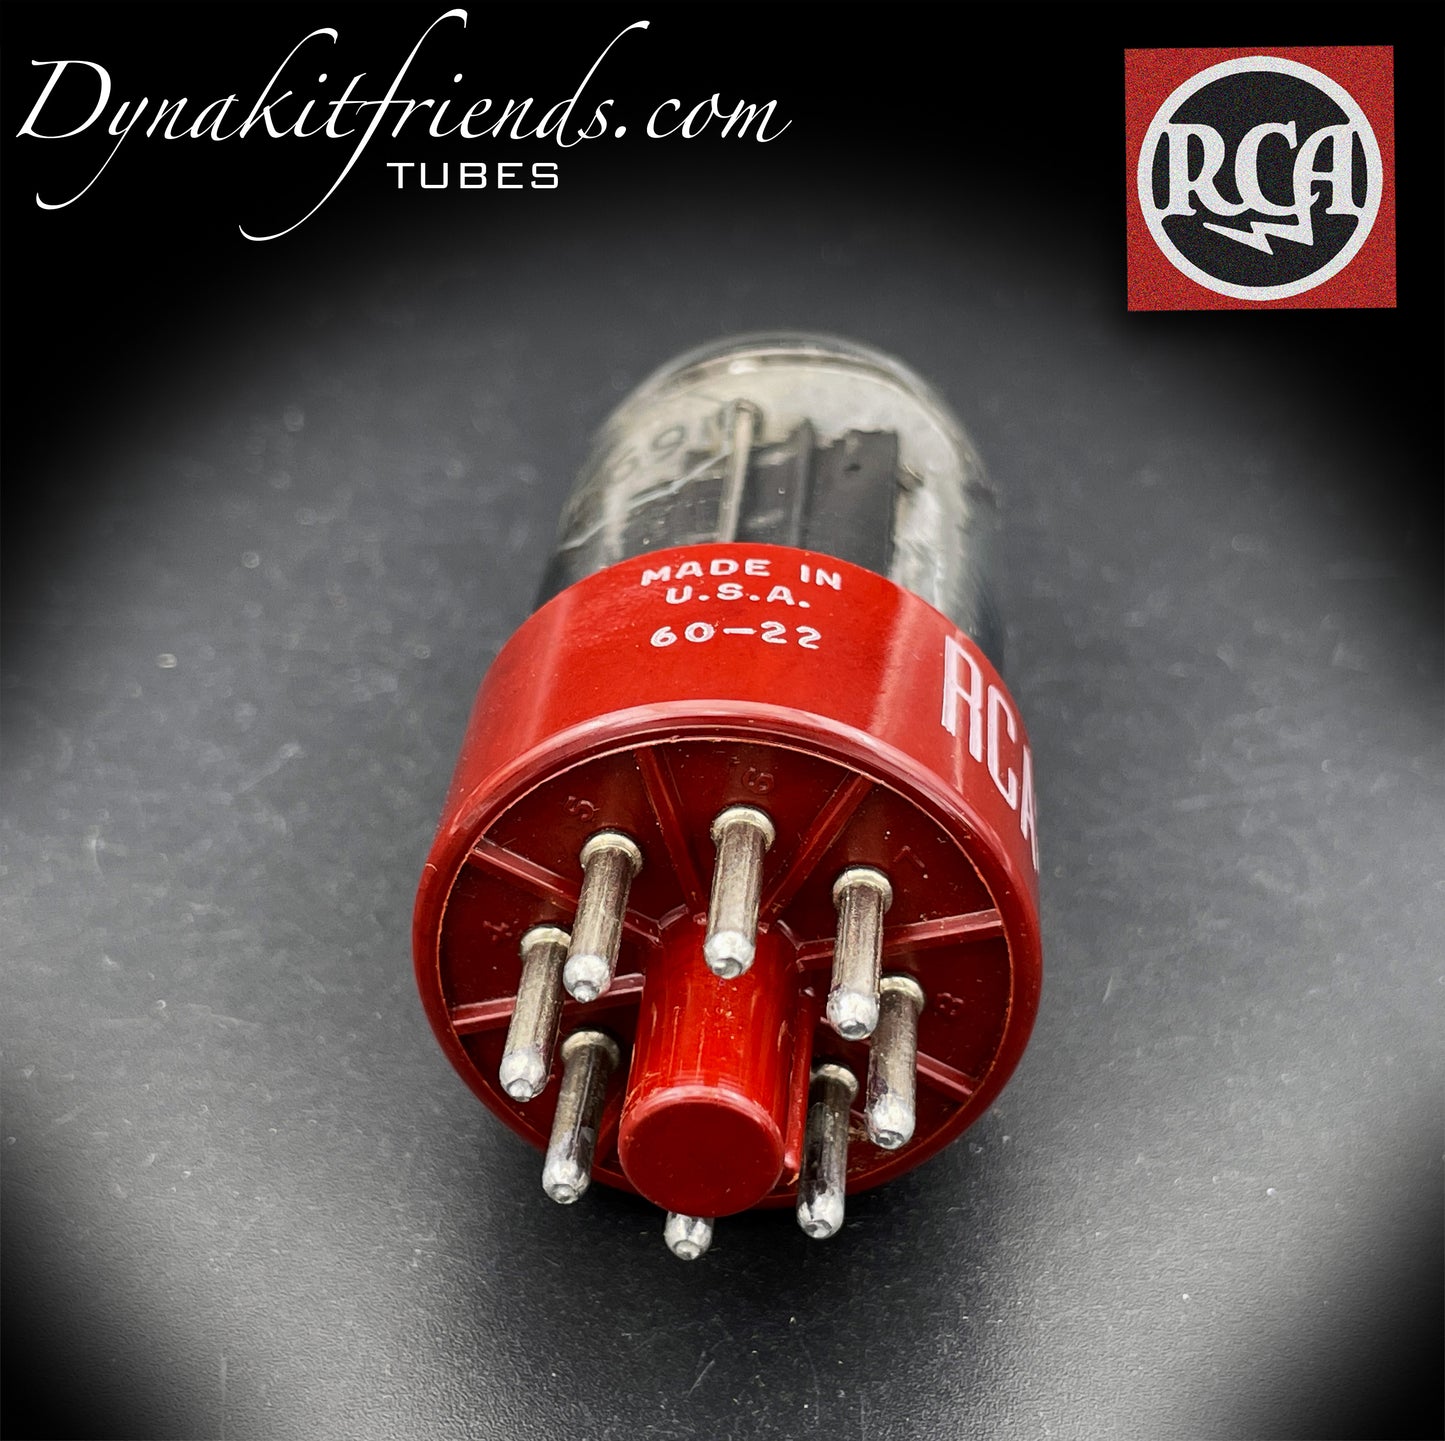 5691 RCA NOS NIB TUBE LEGENDARY RED BASE Black Plates Tube Made in USA